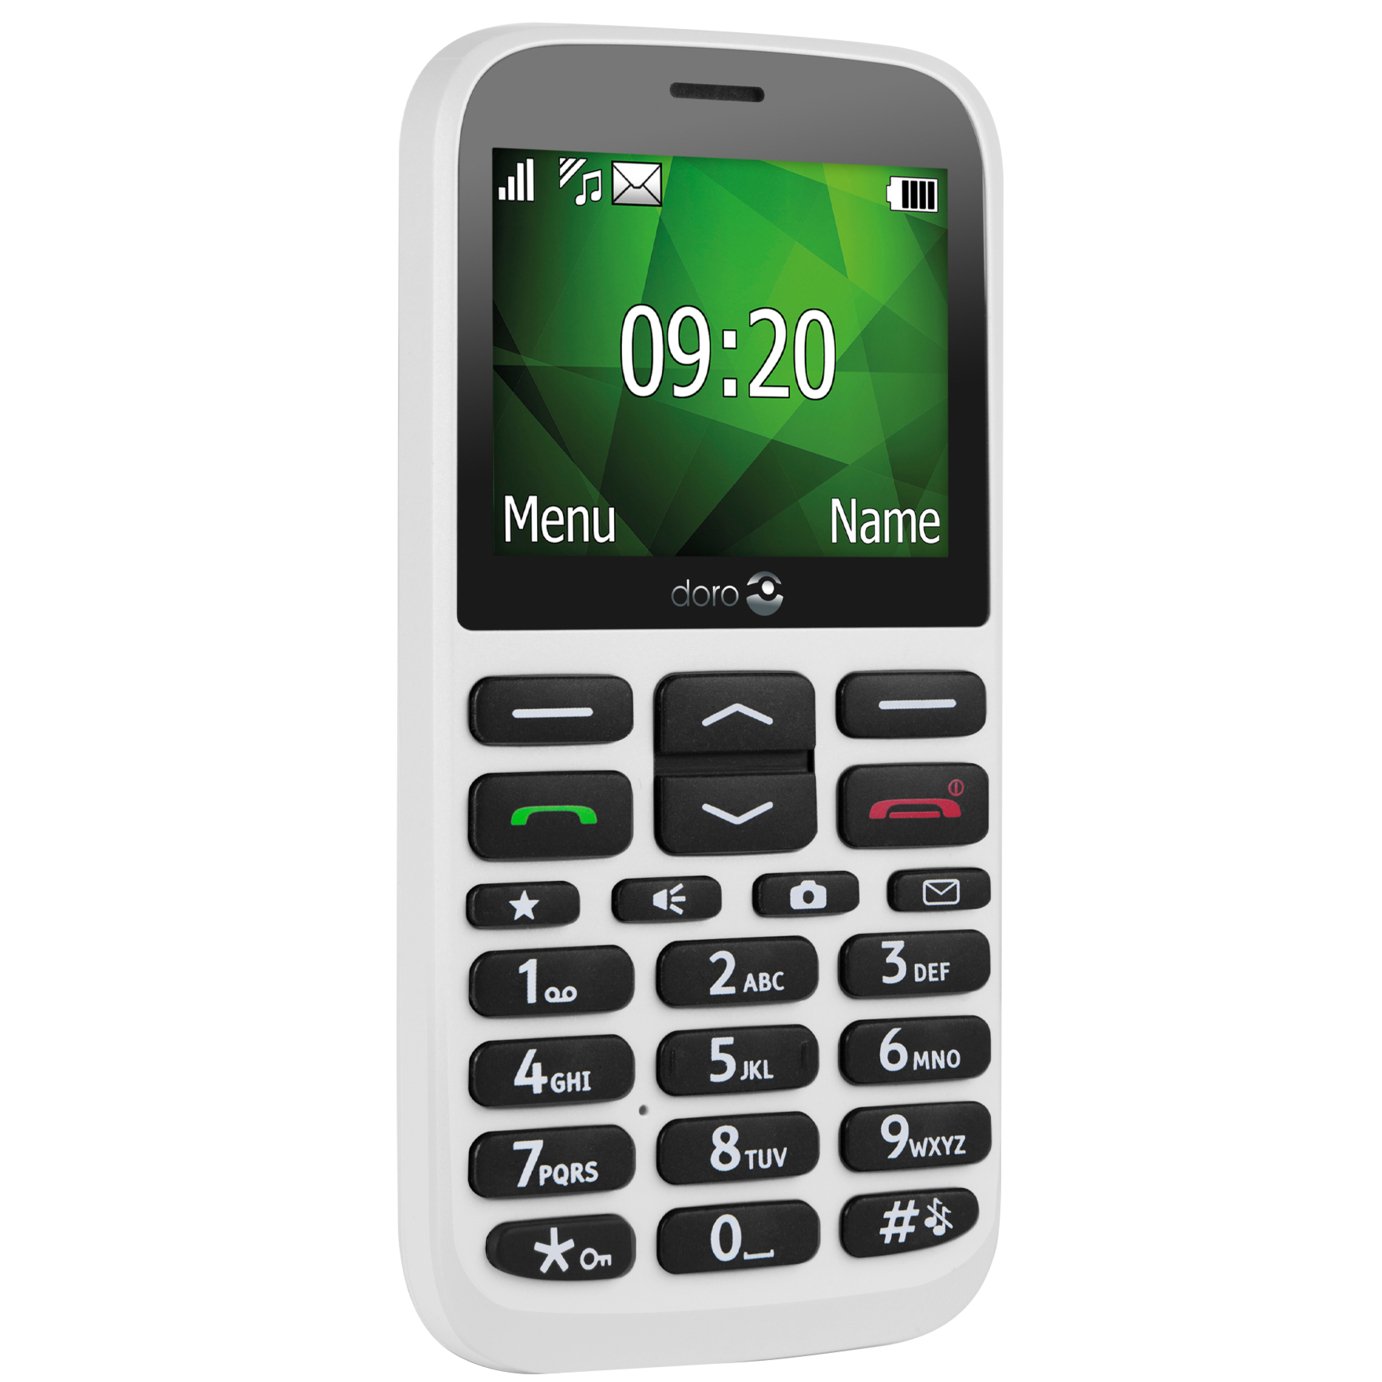 Vodafone Doro 1370 Mobile Phone Review